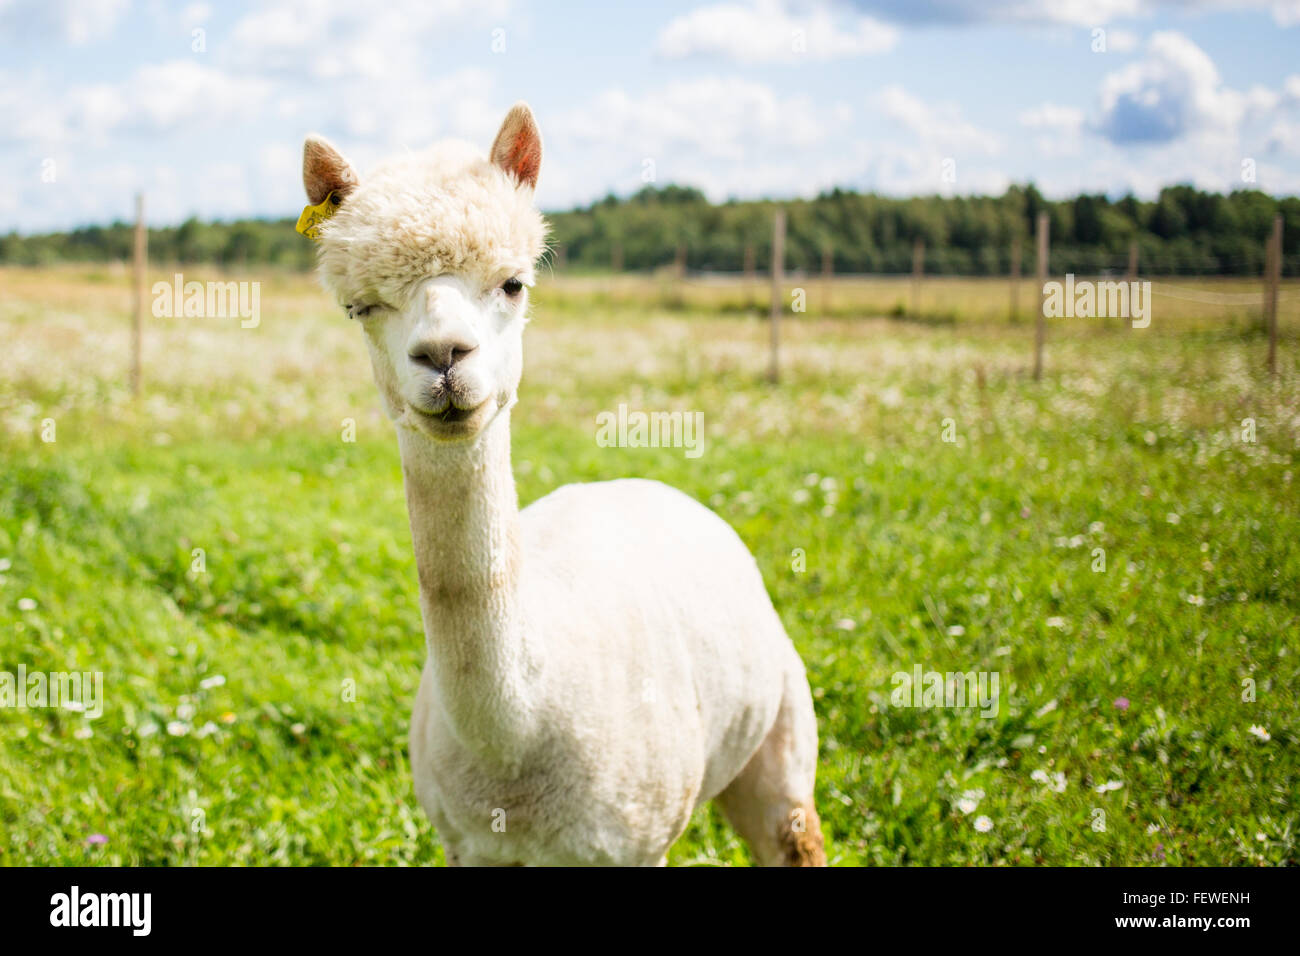 Alpaca Standing On Grassy Field Stock Photo